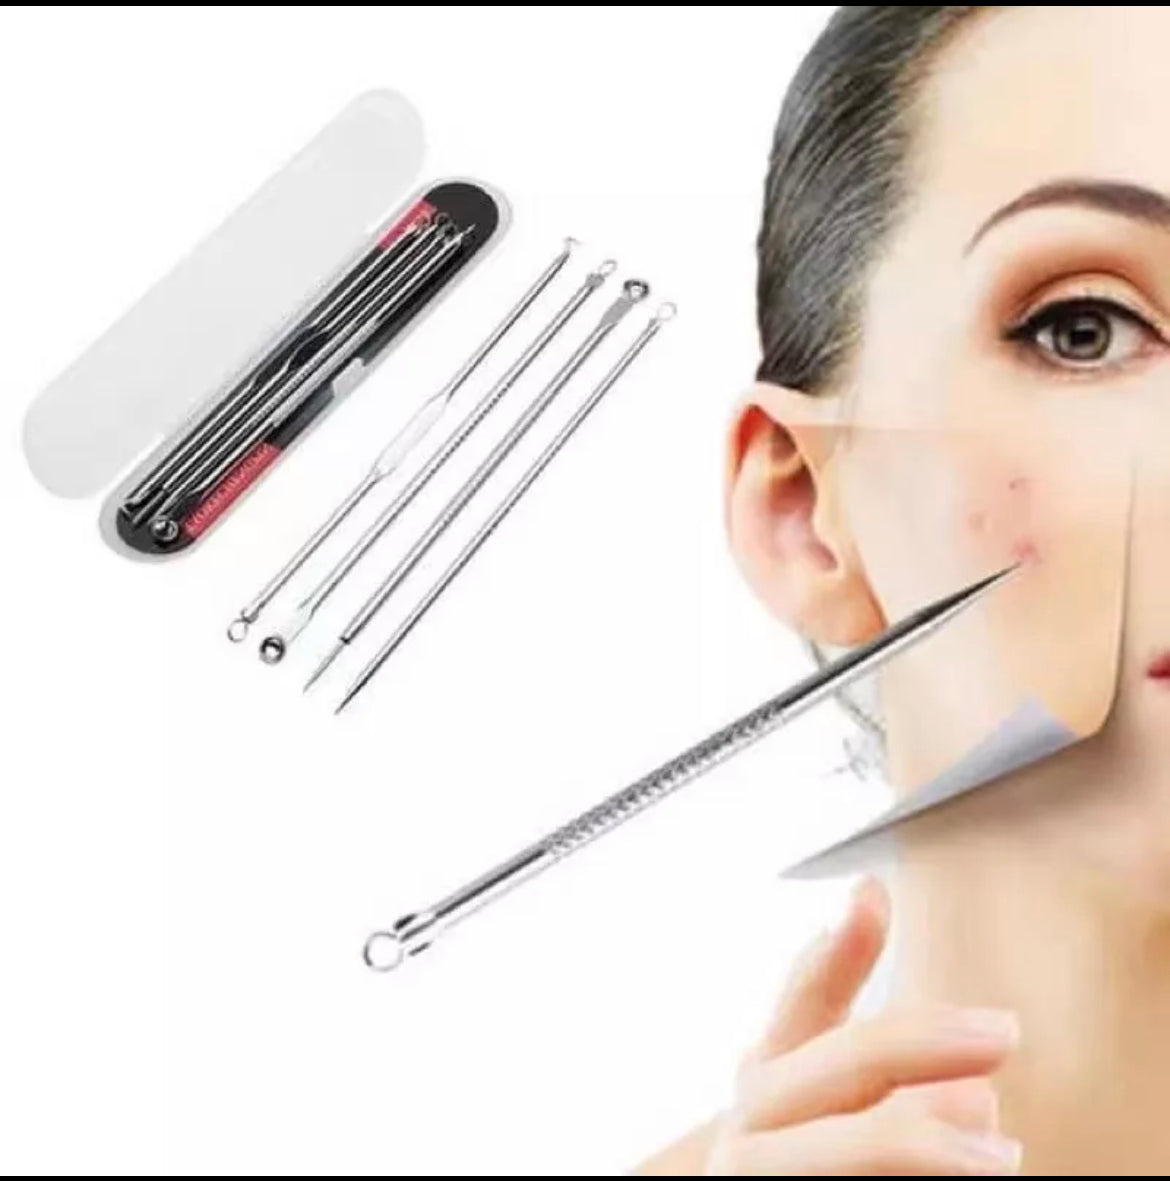 Acne Blackheads Pimple Remover 4Pcs Set in Case Facial Tool